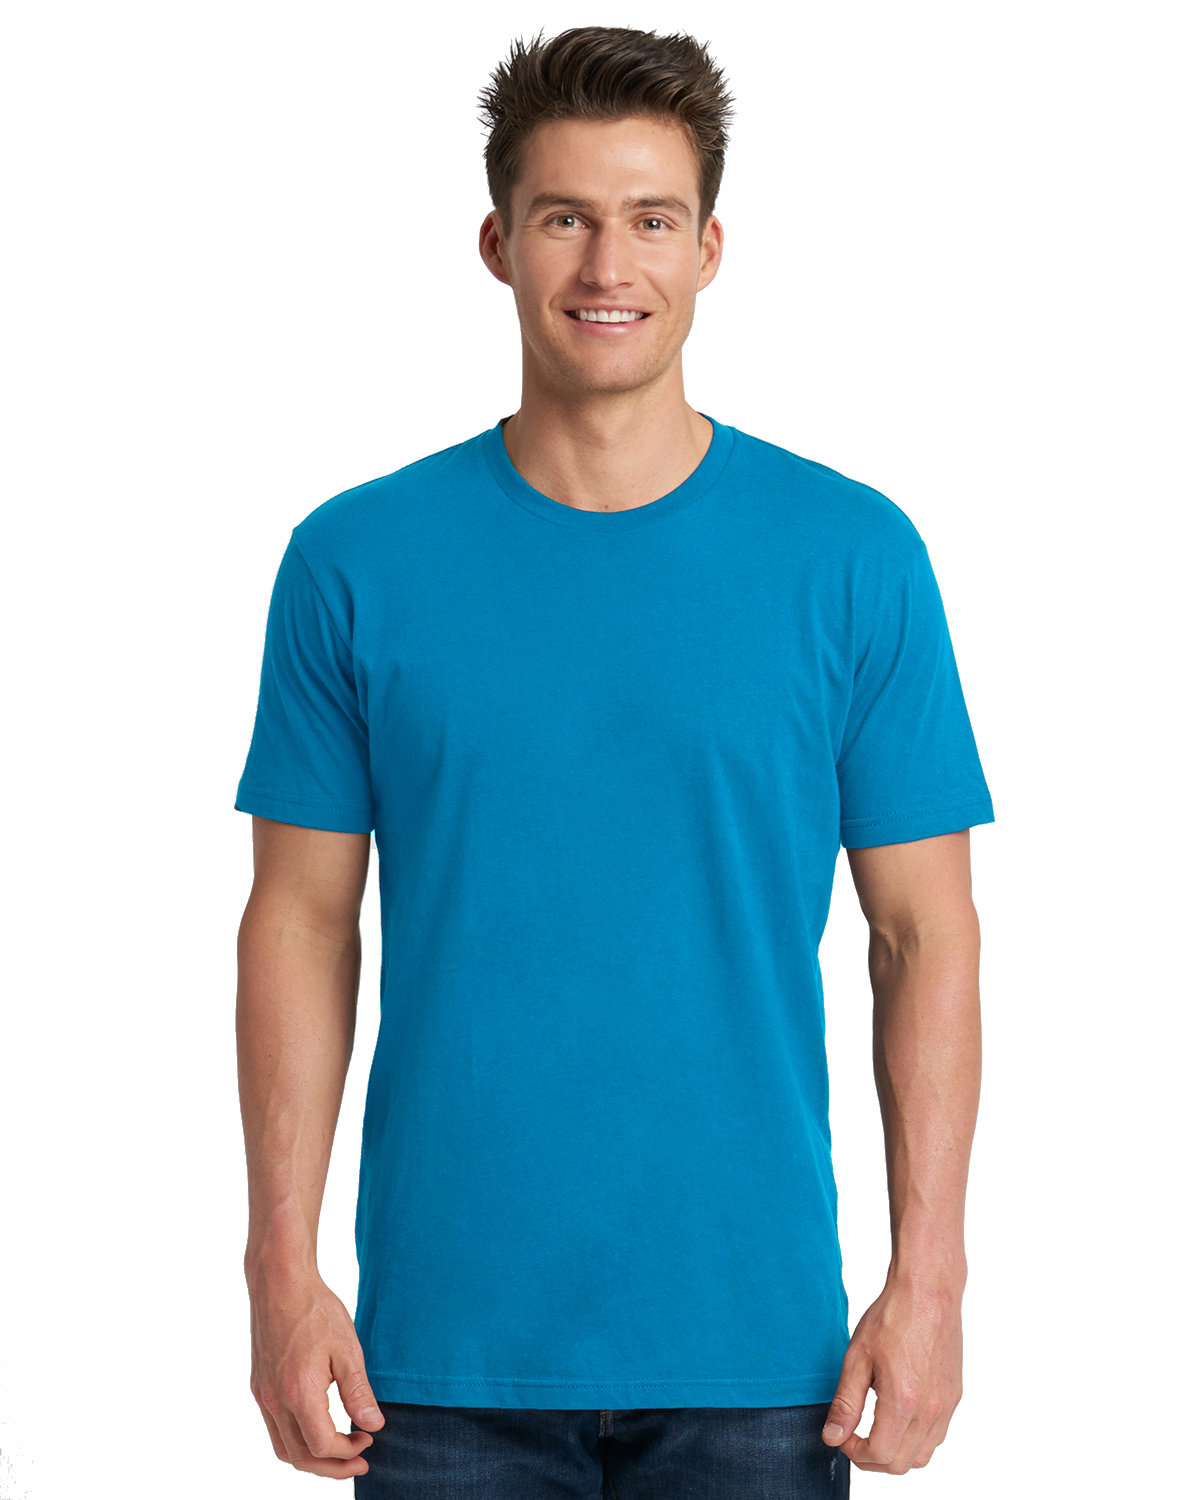 Next Level Cotton Crew Adult 4.3 oz T-shirt 3600 – Merch Doctor